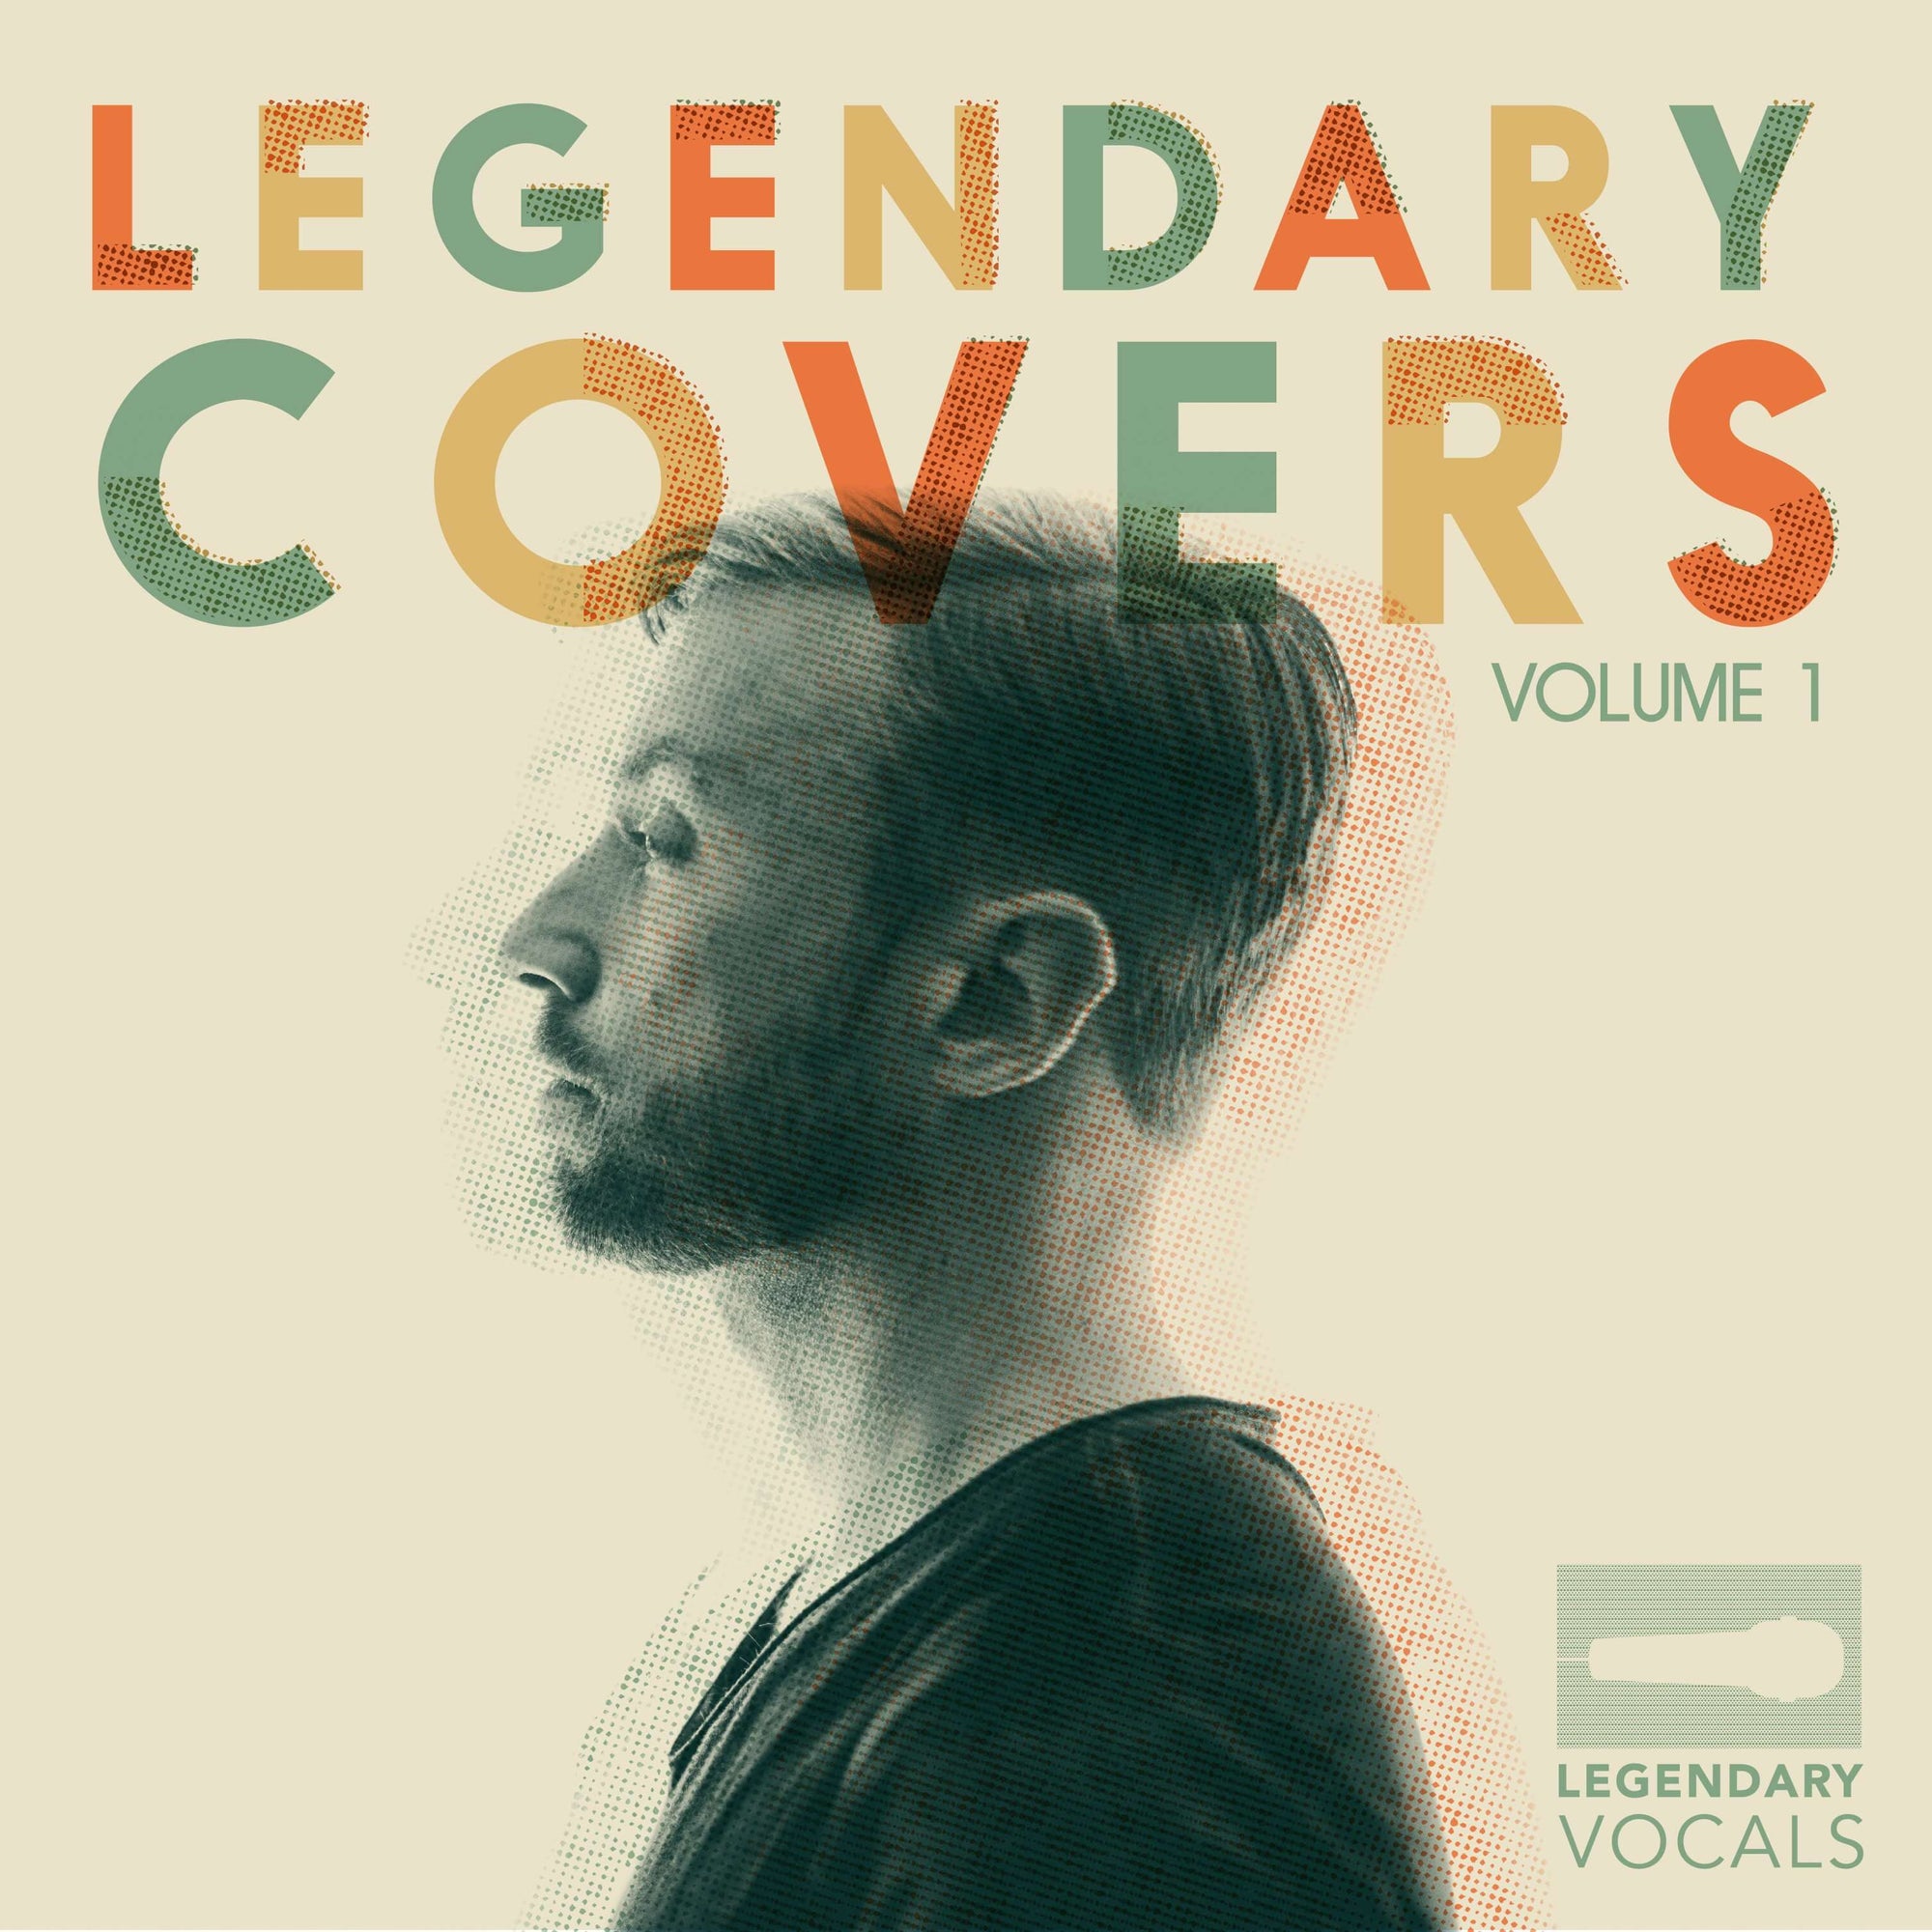 Hollens Vocals by Covers - 1 Legendary Vol. Peter Legendary